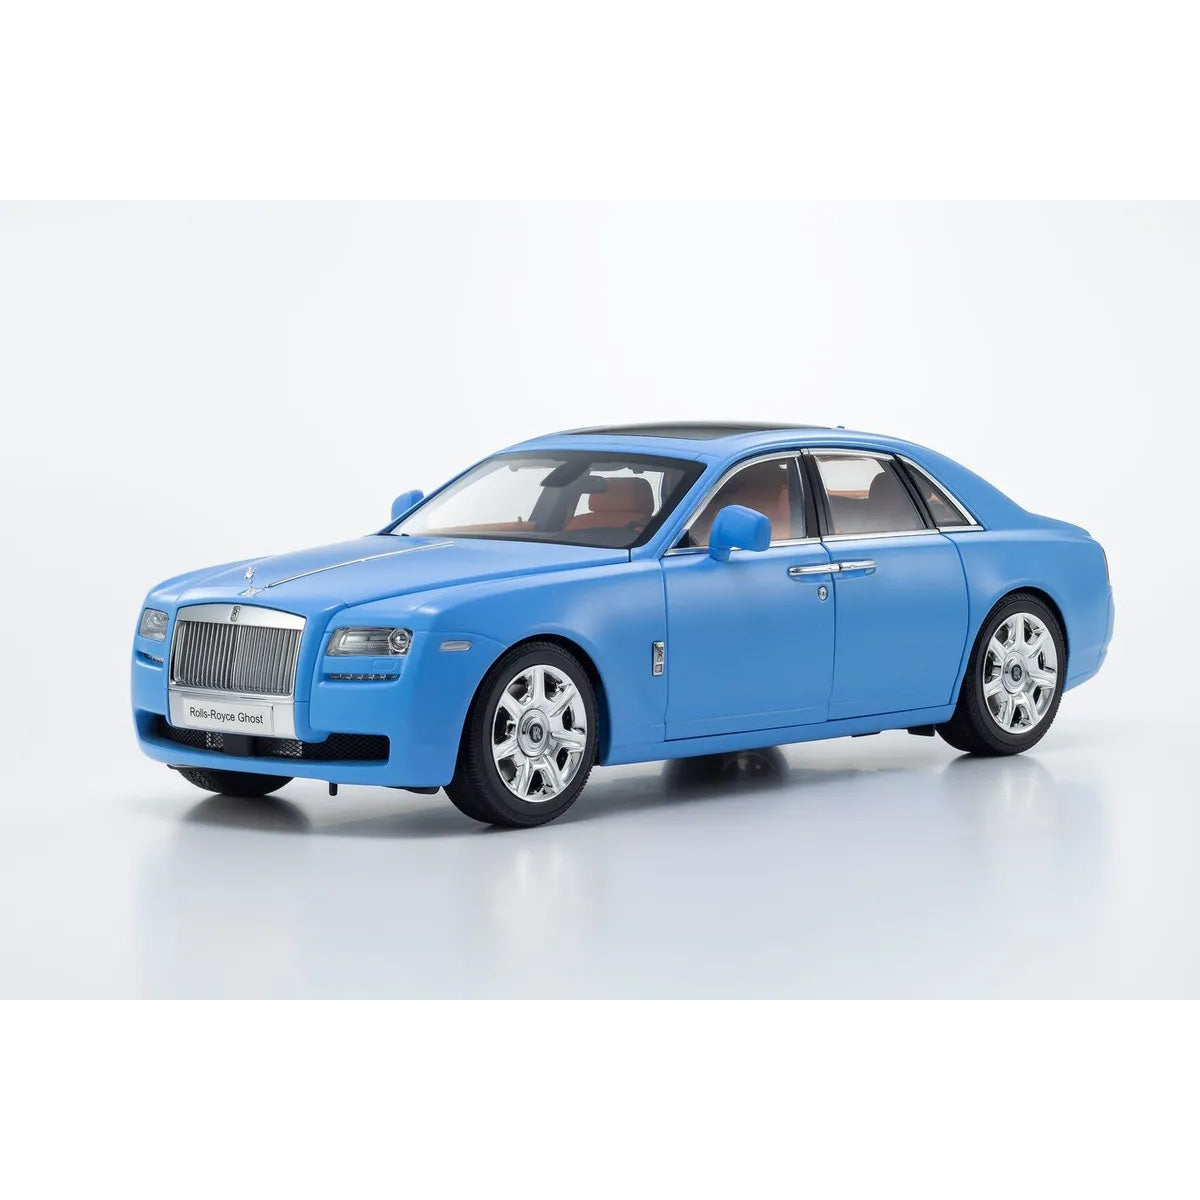 Rolls-Royce Ghost Light Blue - 1:18 Scale Diecast Model Car